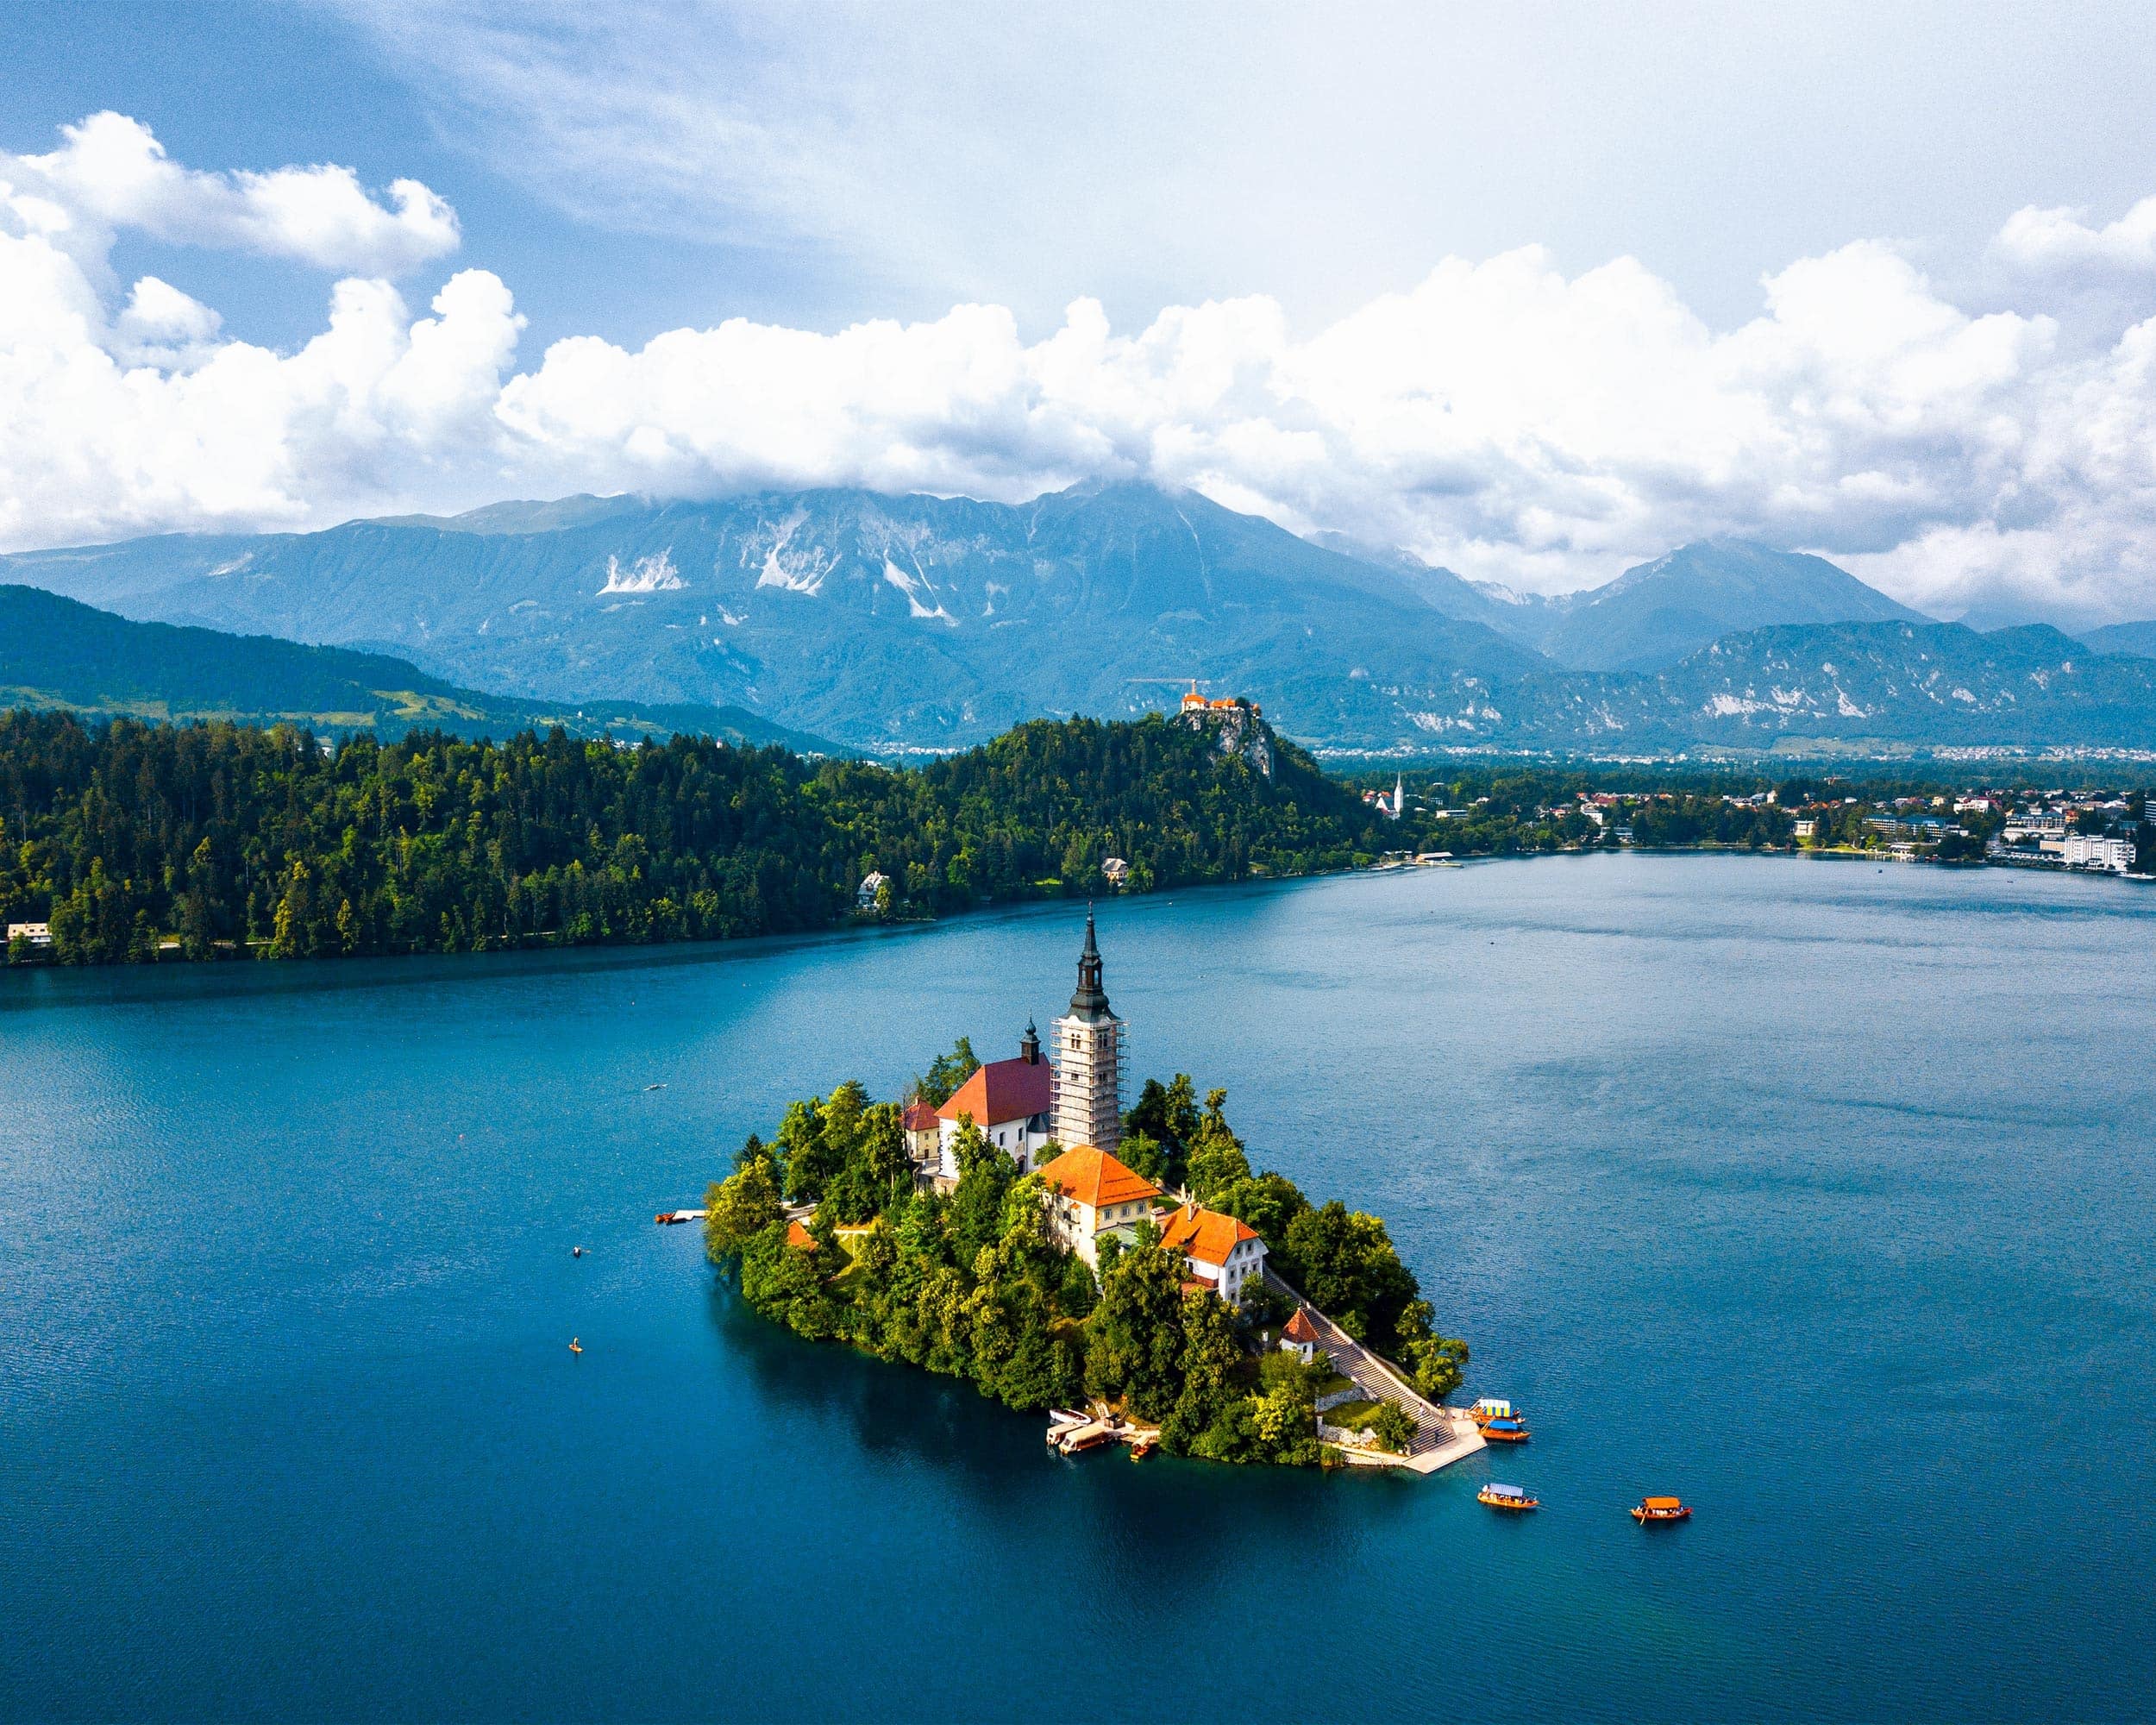 Stock image - Lake Bled, Slovenia - Photo by Daniil Vnoutchkov on Unsplash